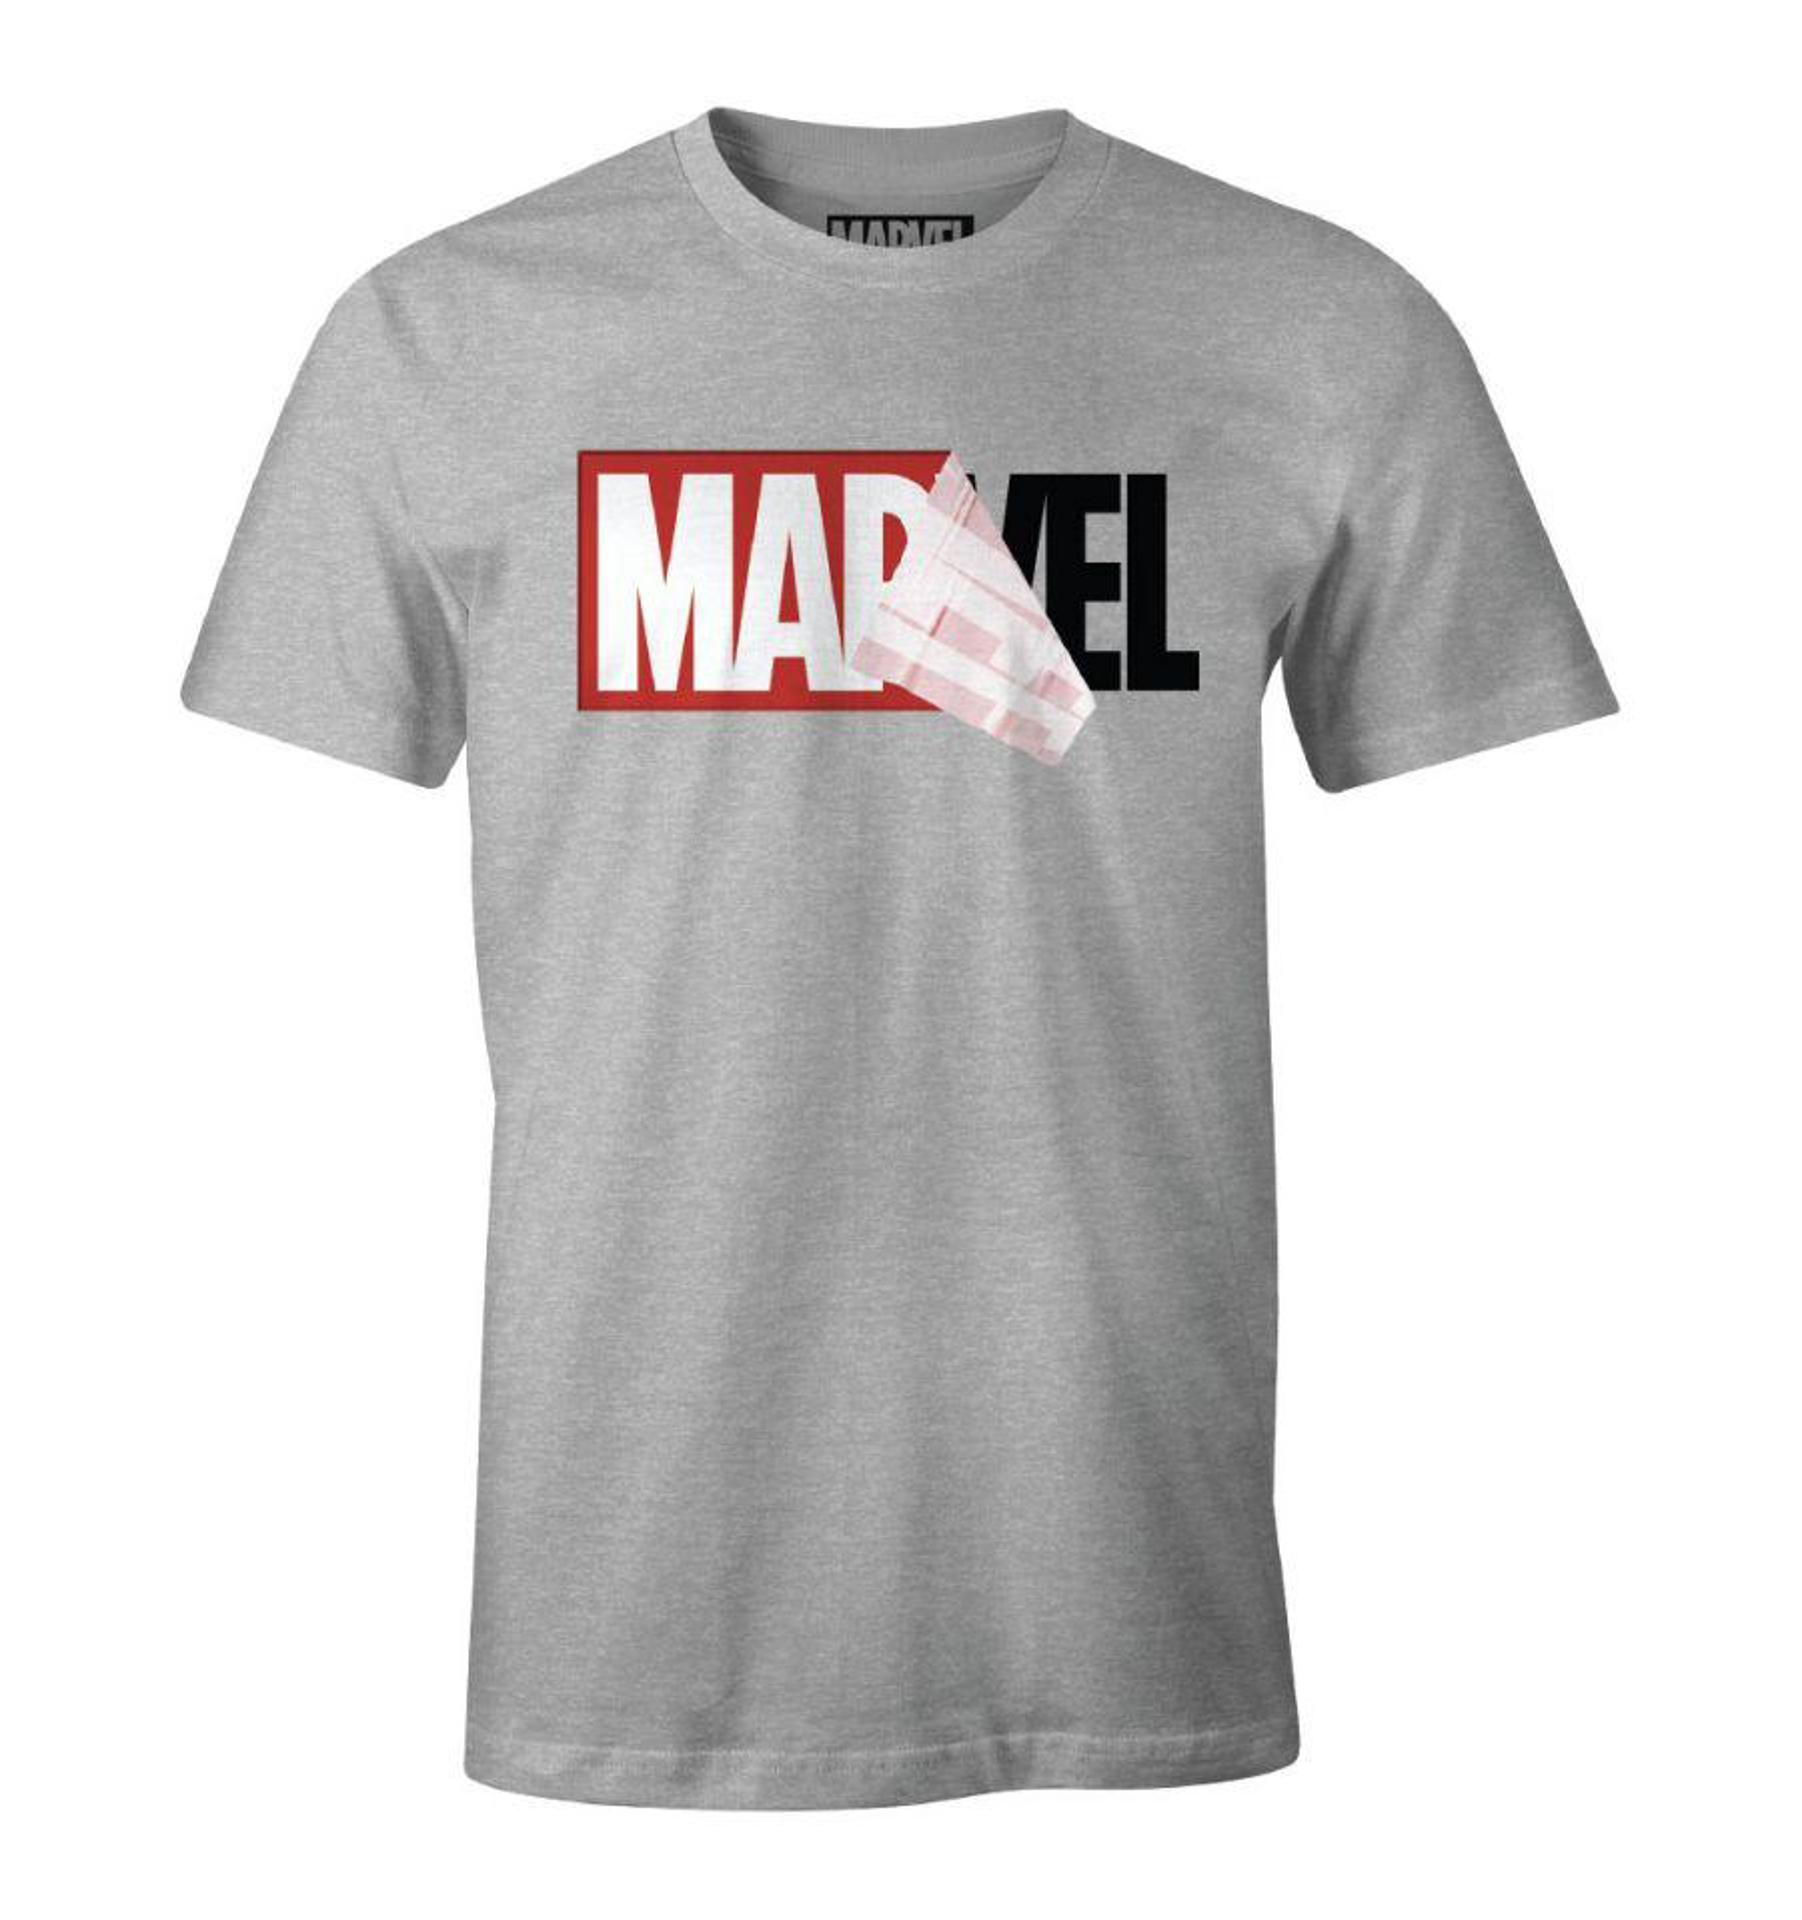 Marvel - Logo Mania Grey T-Shirt M